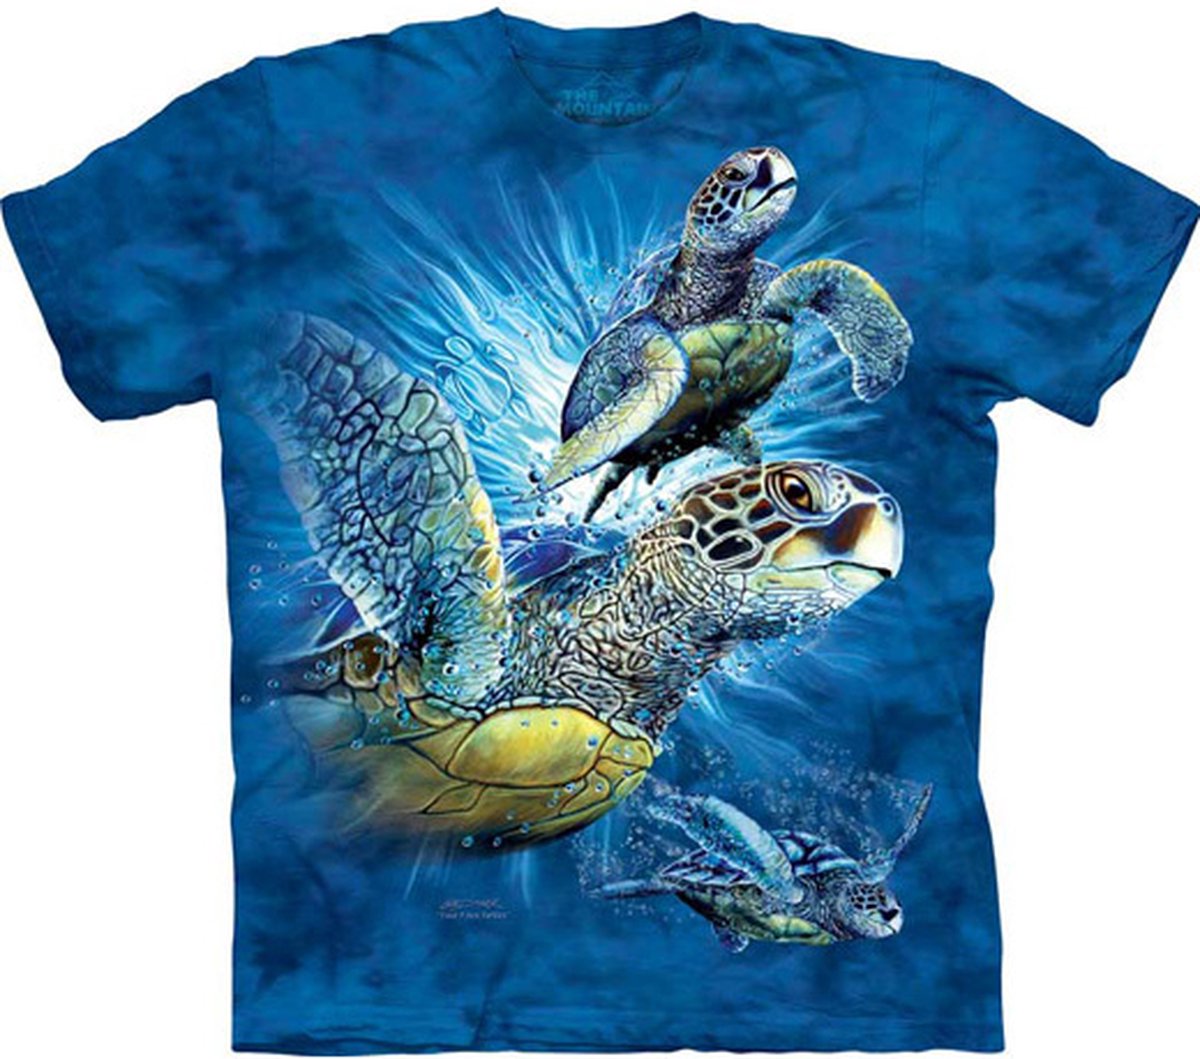 T-shirt Find 9 Sea Turtles 3XL